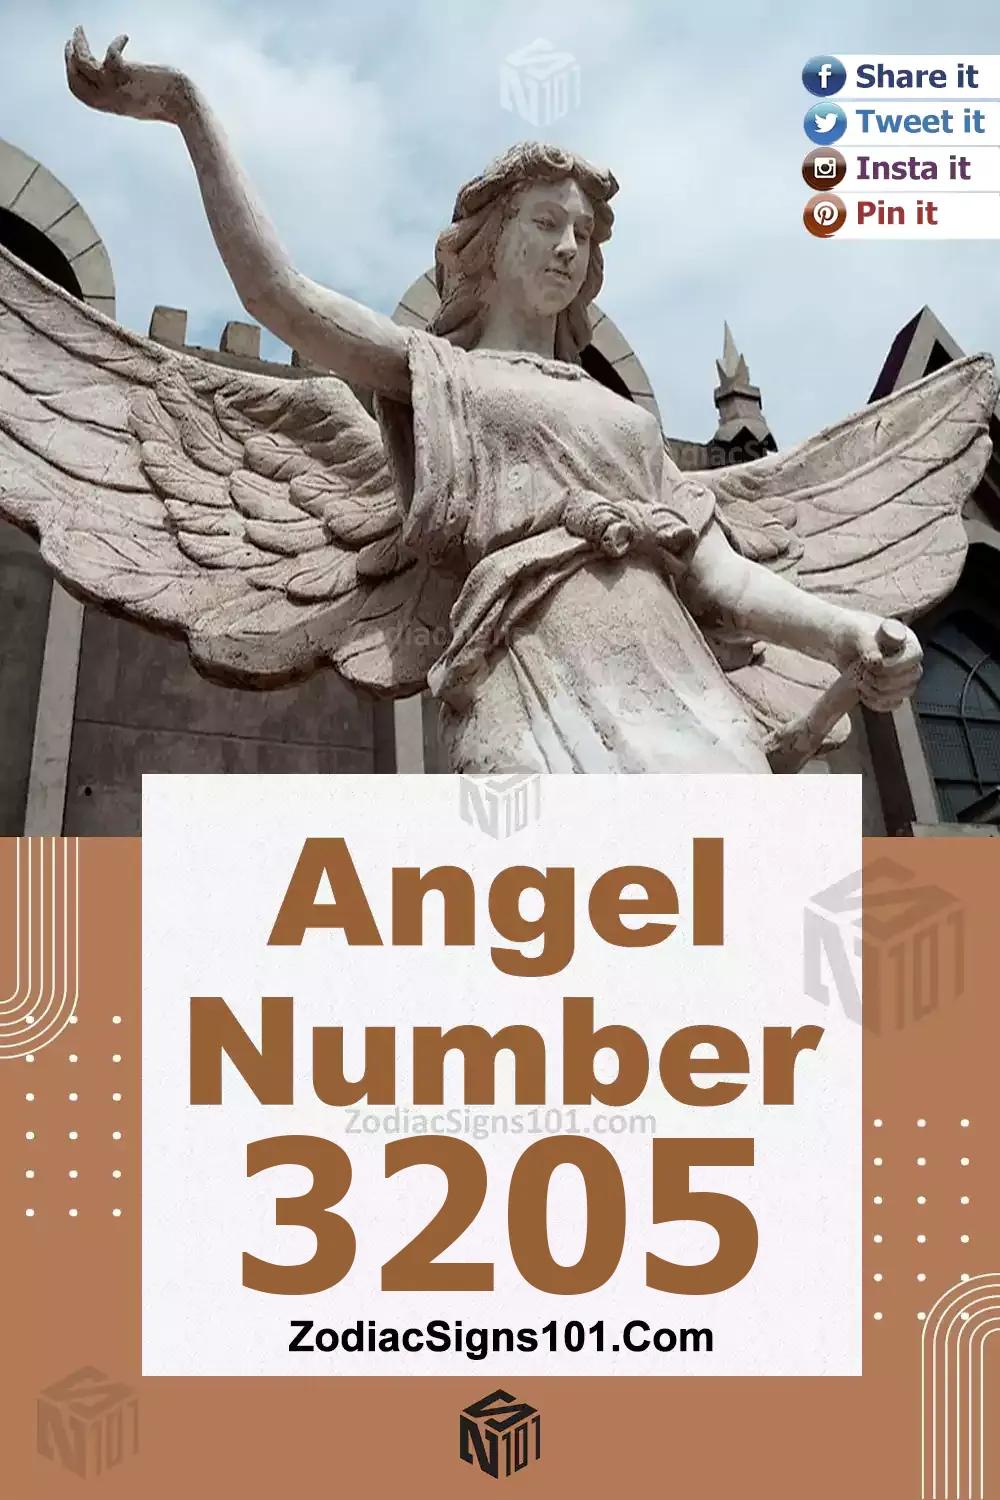 3205-Angel-Number-Meaning.jpg